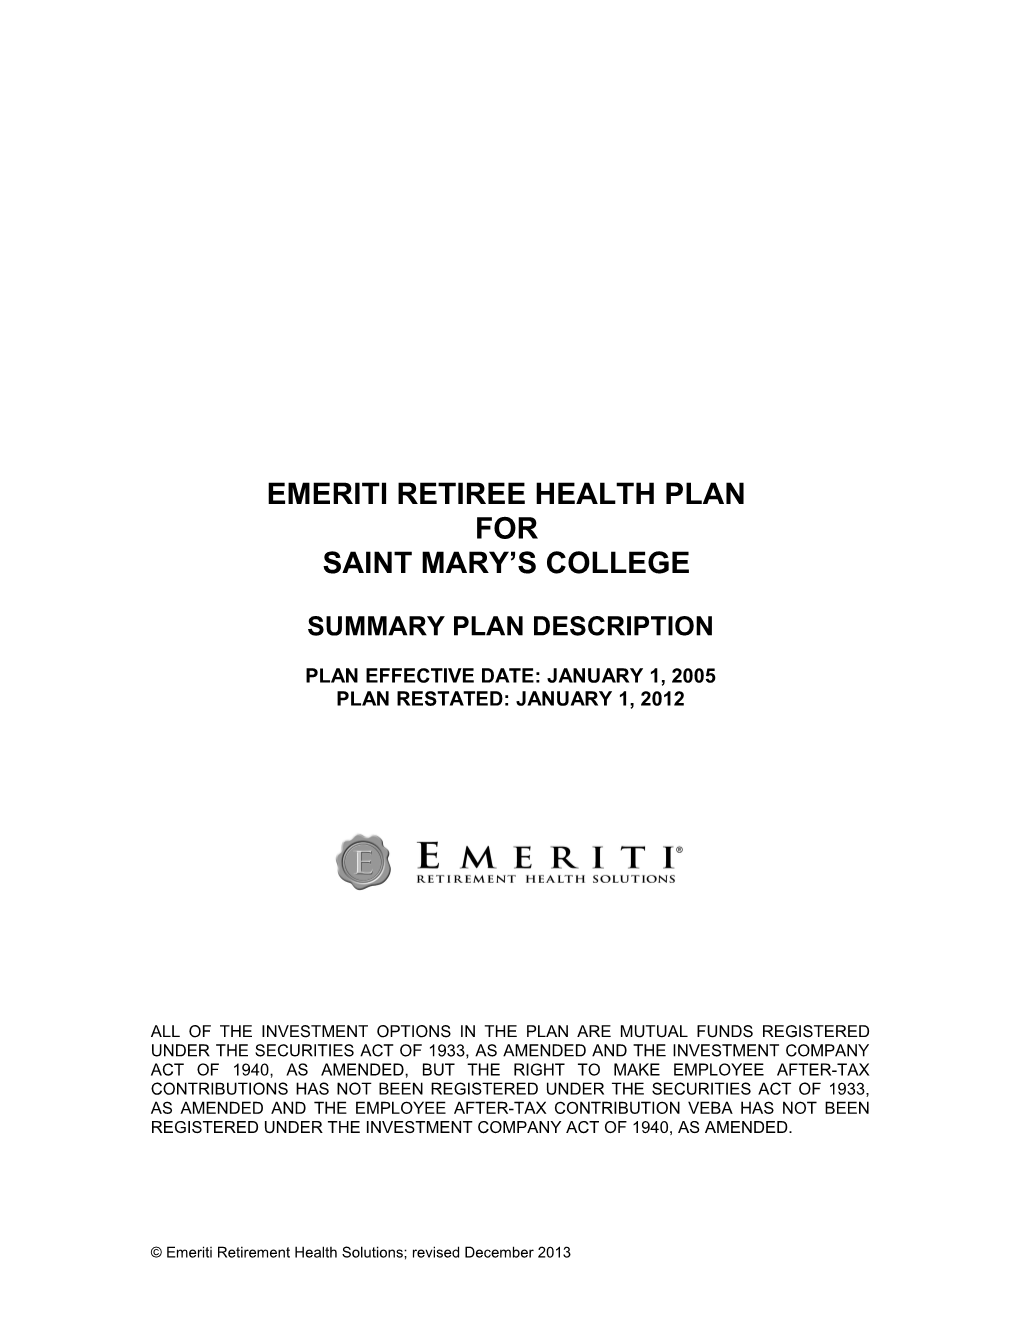 Emeriti Retiree Health Plan